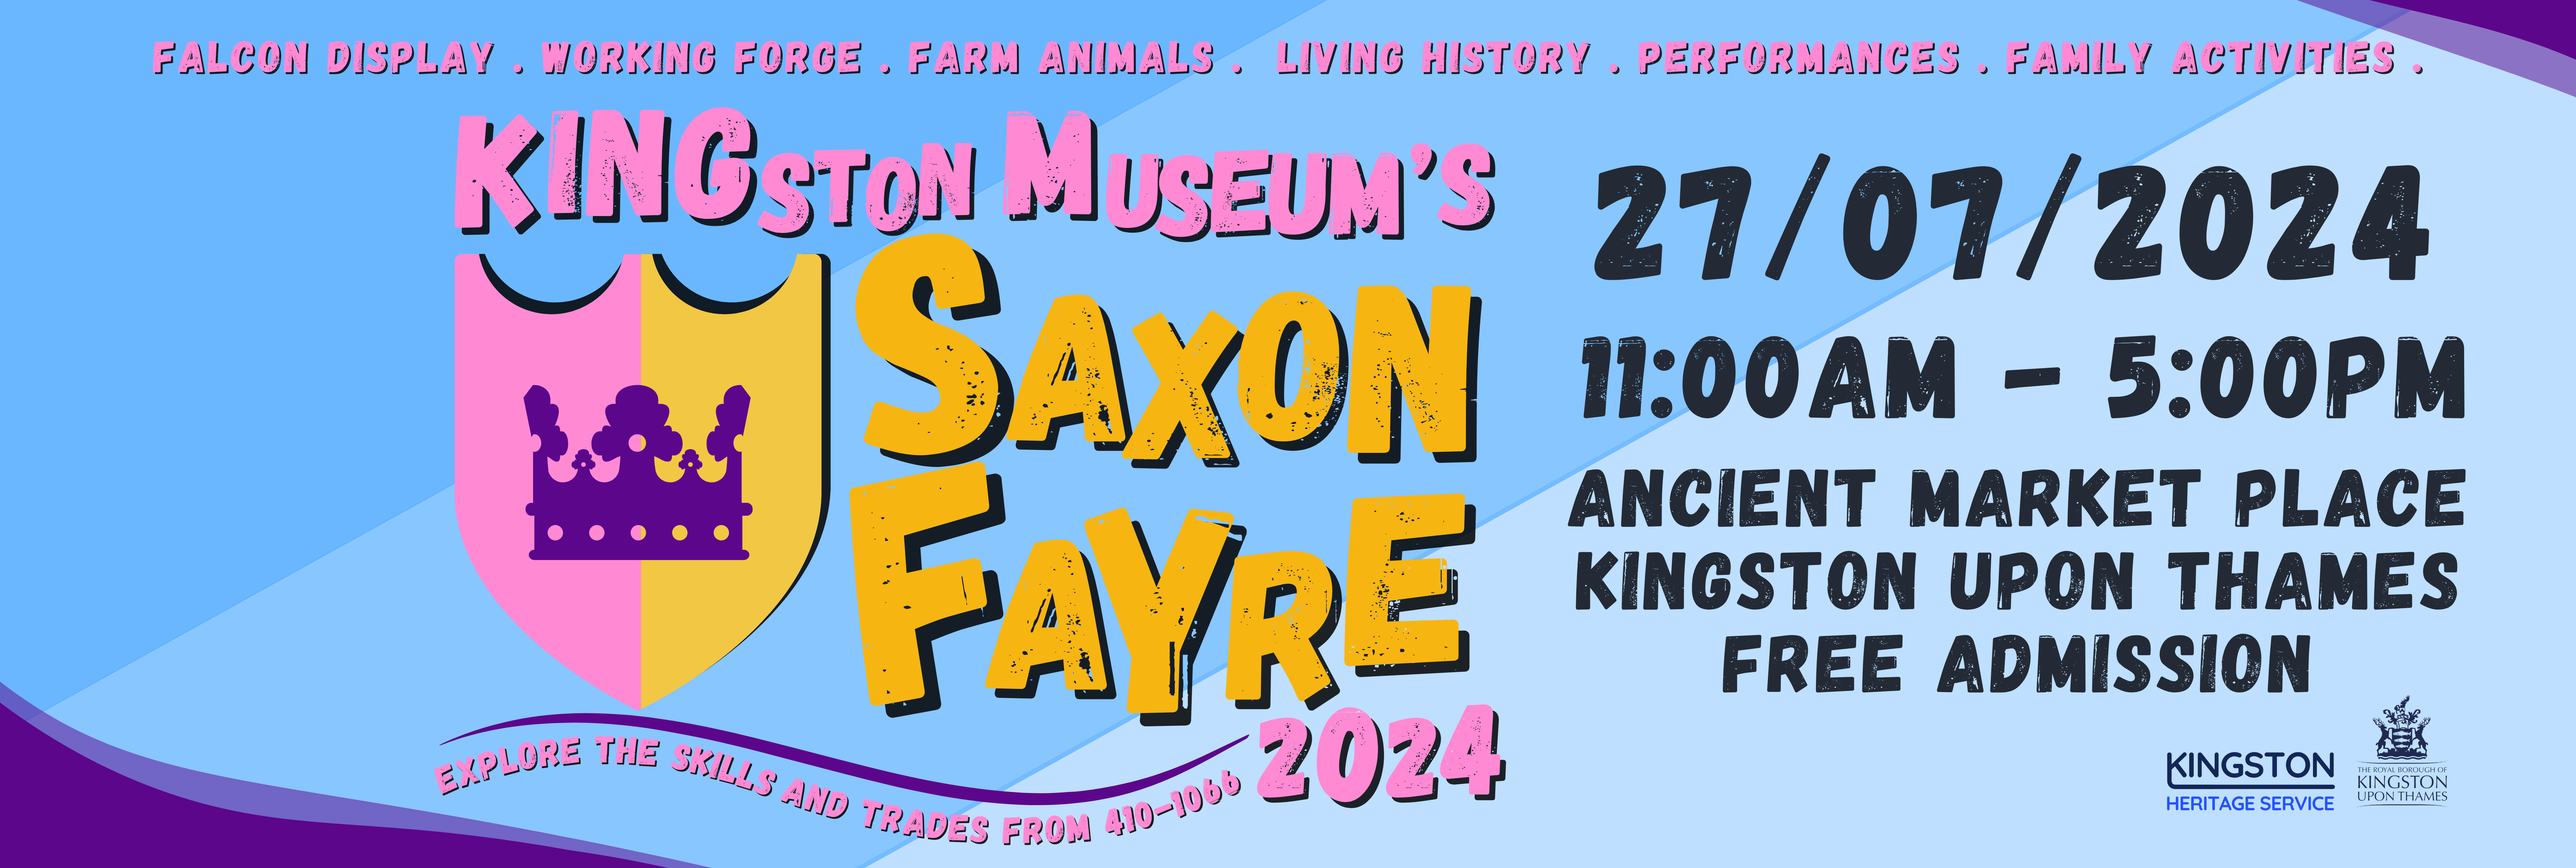 Kingston museum s saxon fayre 2024